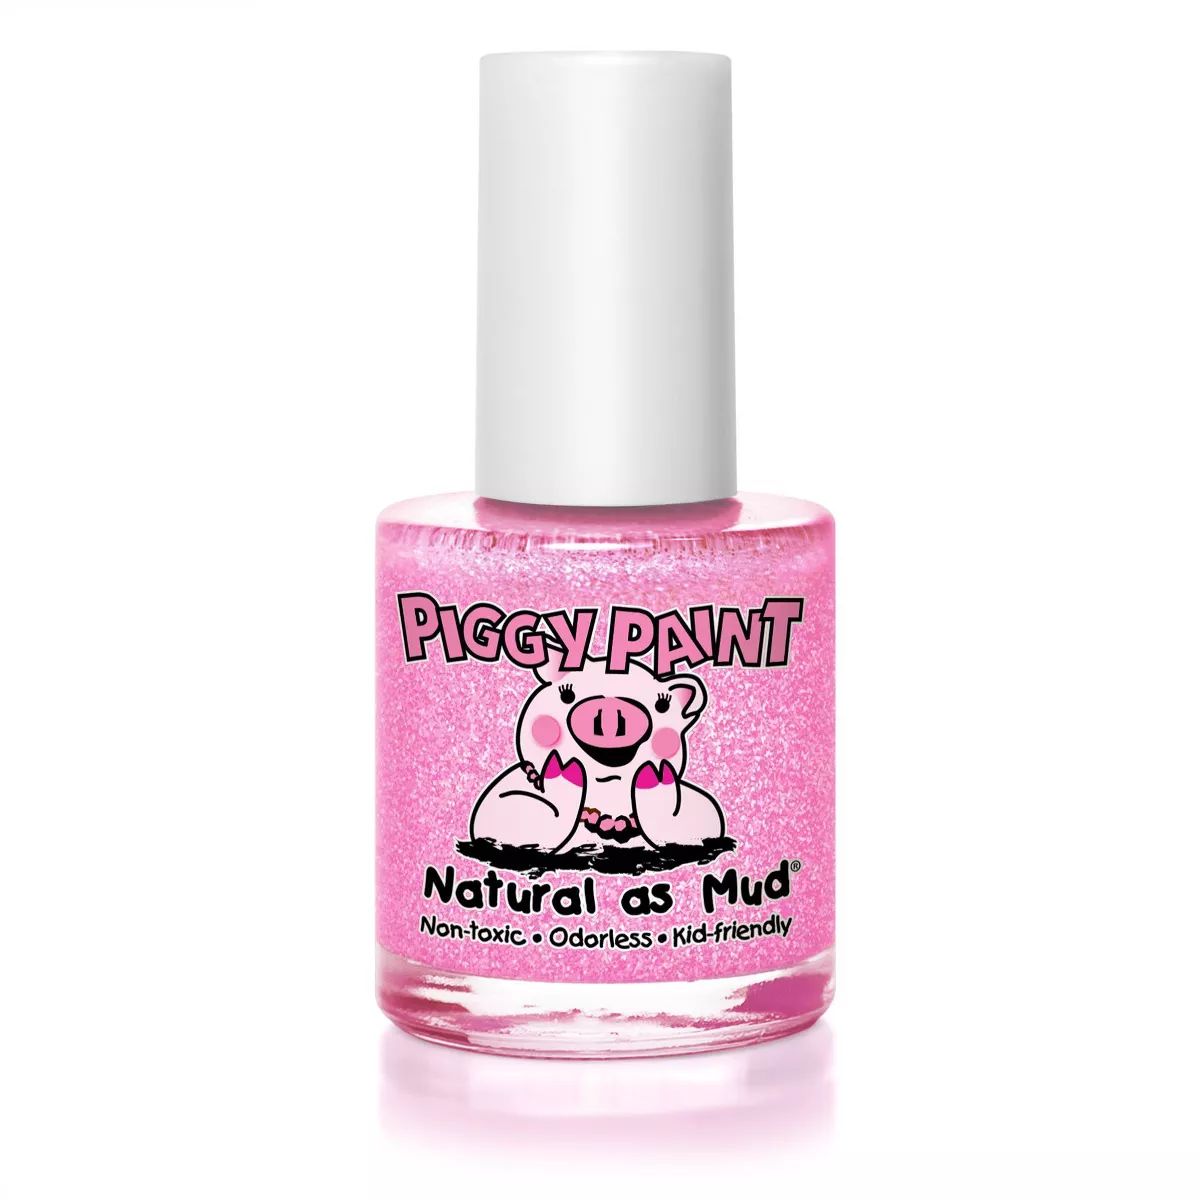 Piggy Paint Nail Polish - Let's Jam - 0.33 fl oz | Target